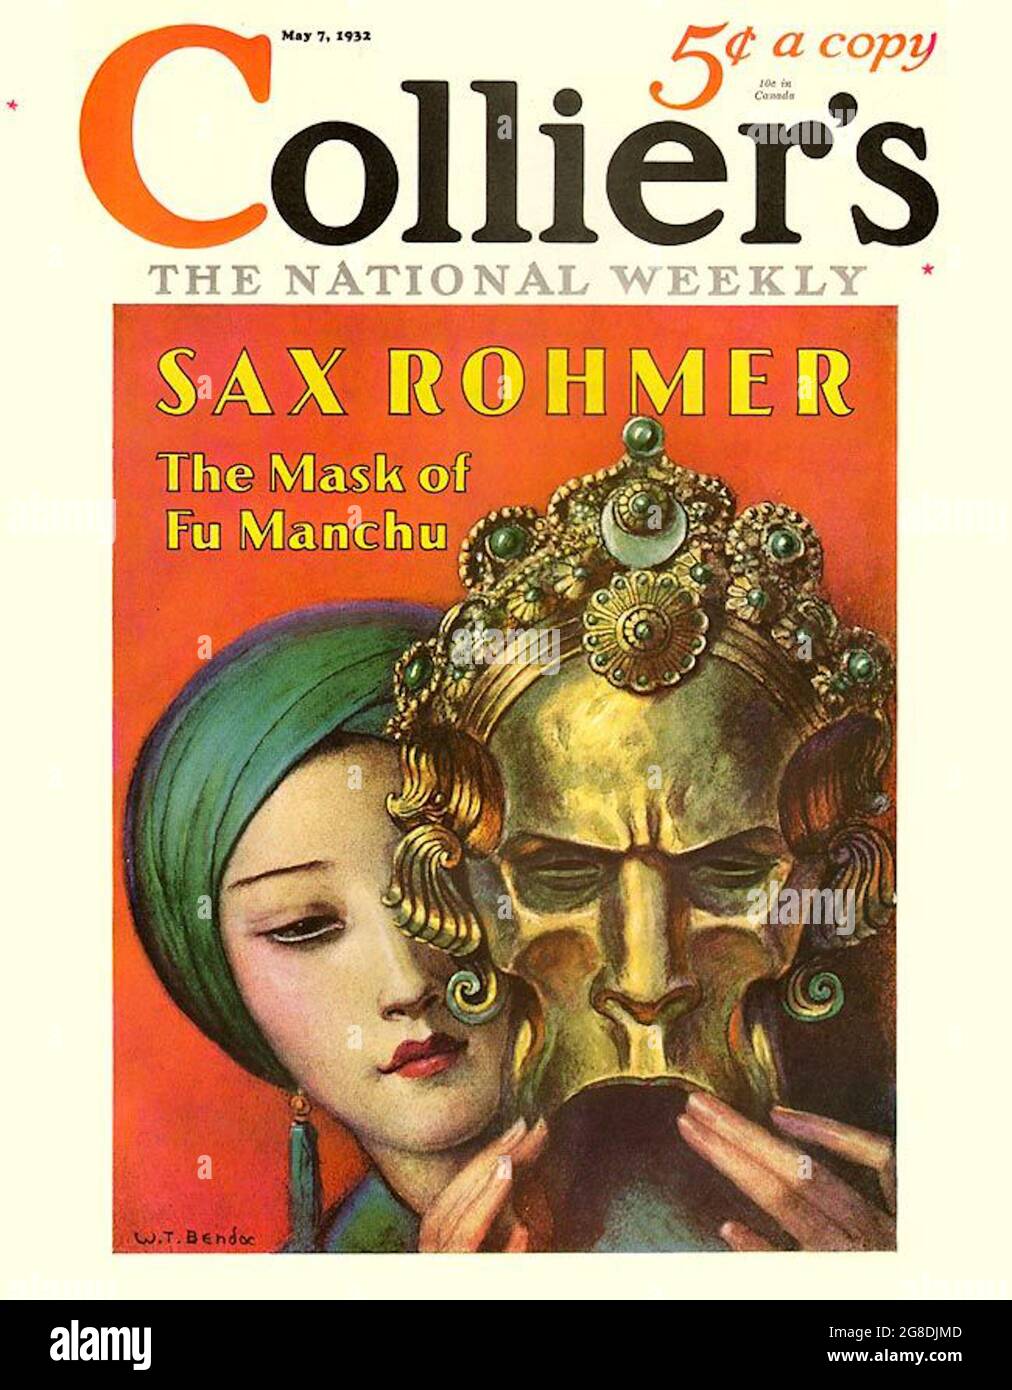 Władysław Teodor Benda's magazine cover design for Collier's The National Magazine - Sax Rohmer - The Mask of fu Manchu. Foto Stock